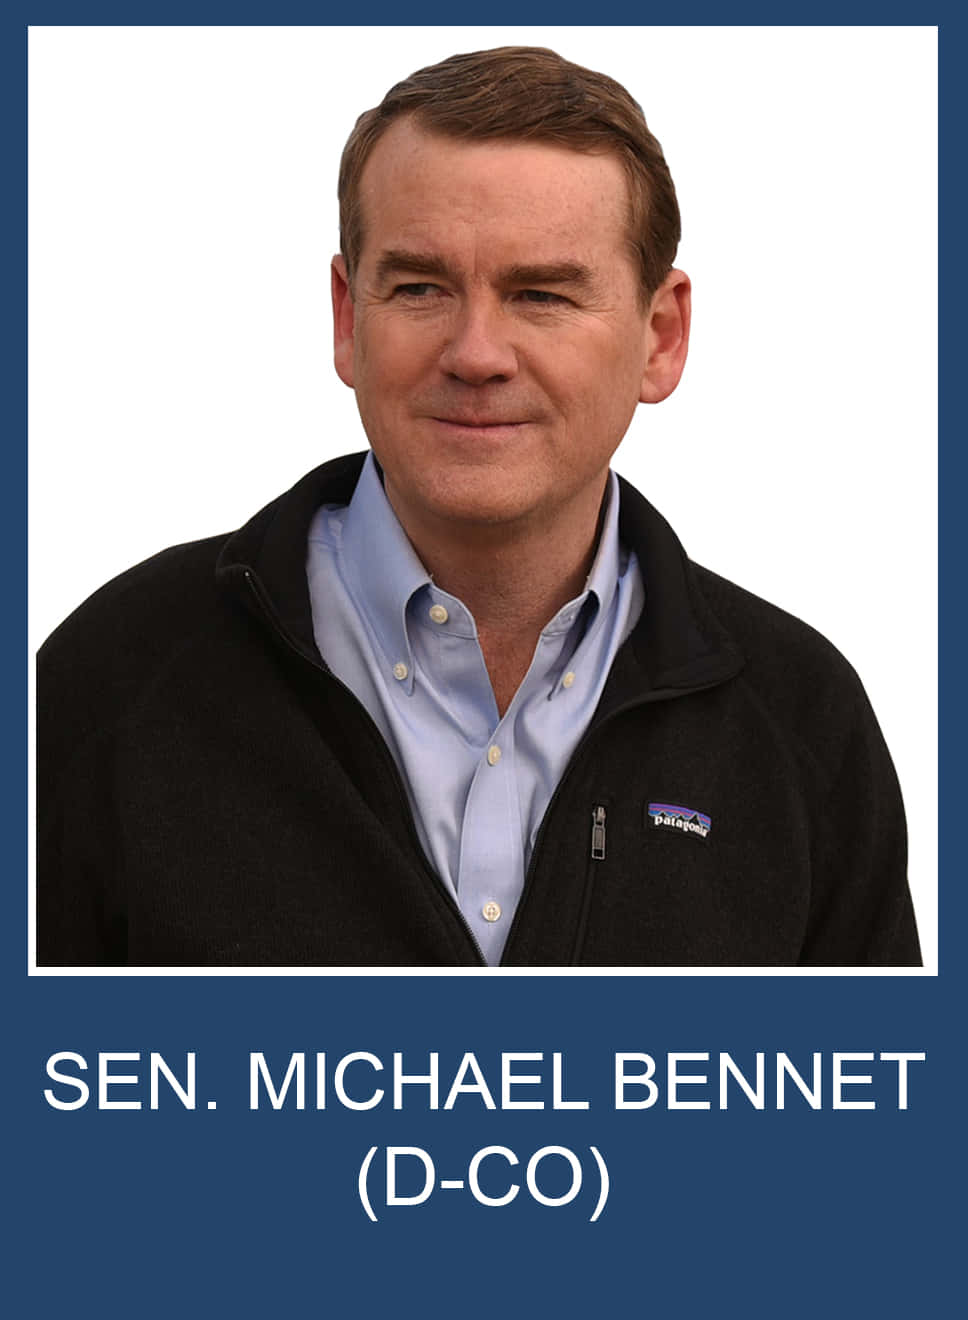 Democratic Presidential Candidate Michael Bennet Wallpaper